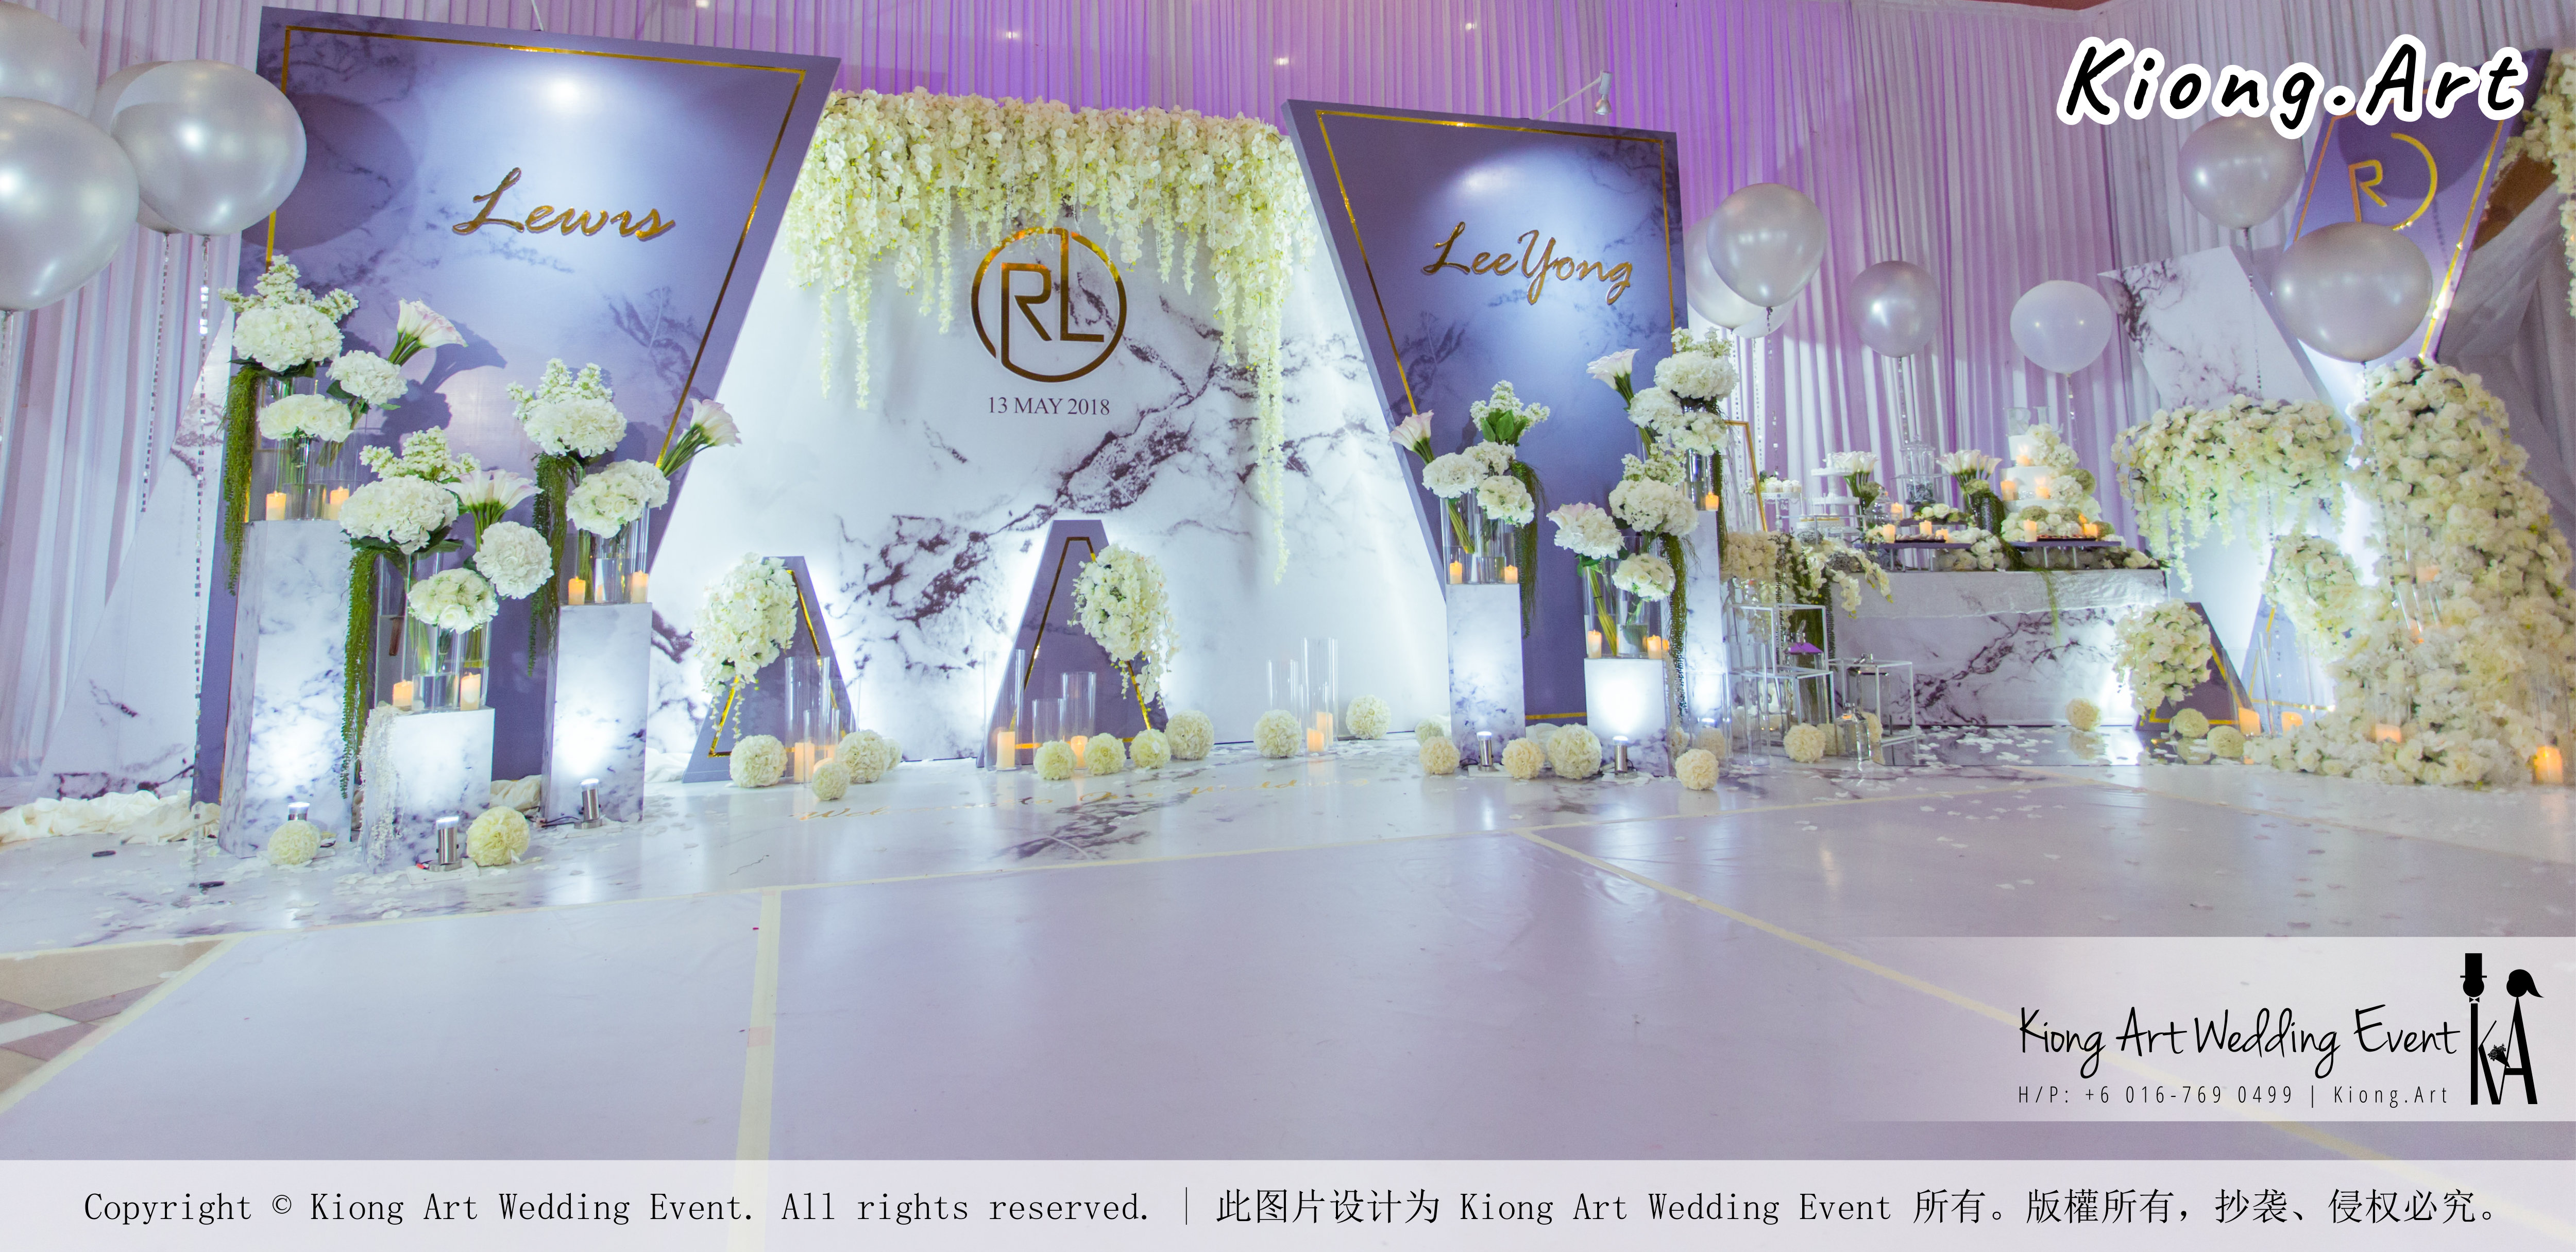 Kiong Art Wedding Event Kuala Lumpur Malaysia Event and Wedding DecorationCompany One-stop Wedding Planning Services Wedding Theme Live Band Wedding Photography Videography A03-08